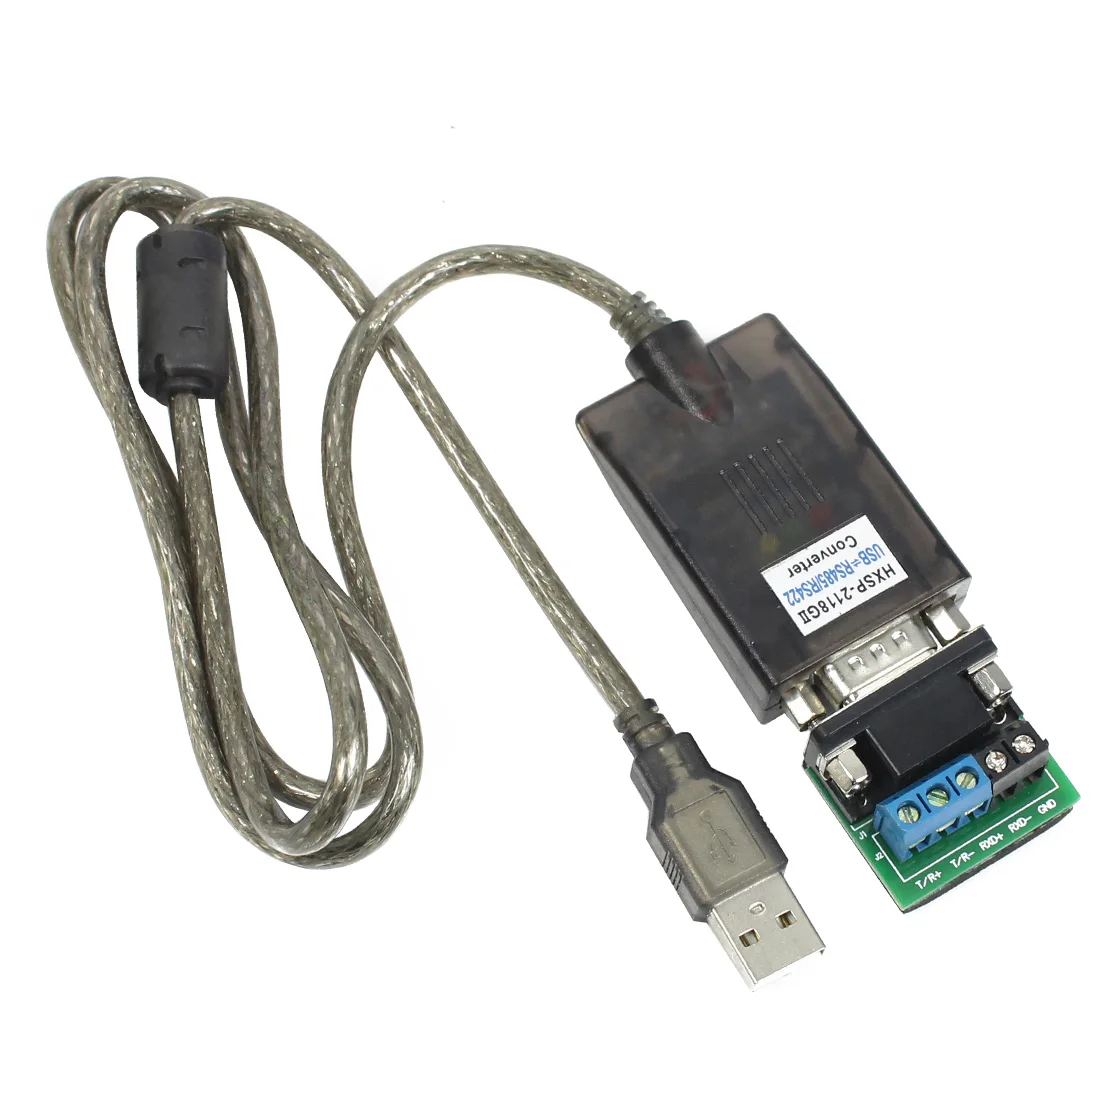 Cable adaptador convertidor Serie USB 2,0 a RS485 RS-485 RS422 RS-422 DB9 COM, Chip FTDI Industrial, protección contra sobretensiones de 400W, 70cm